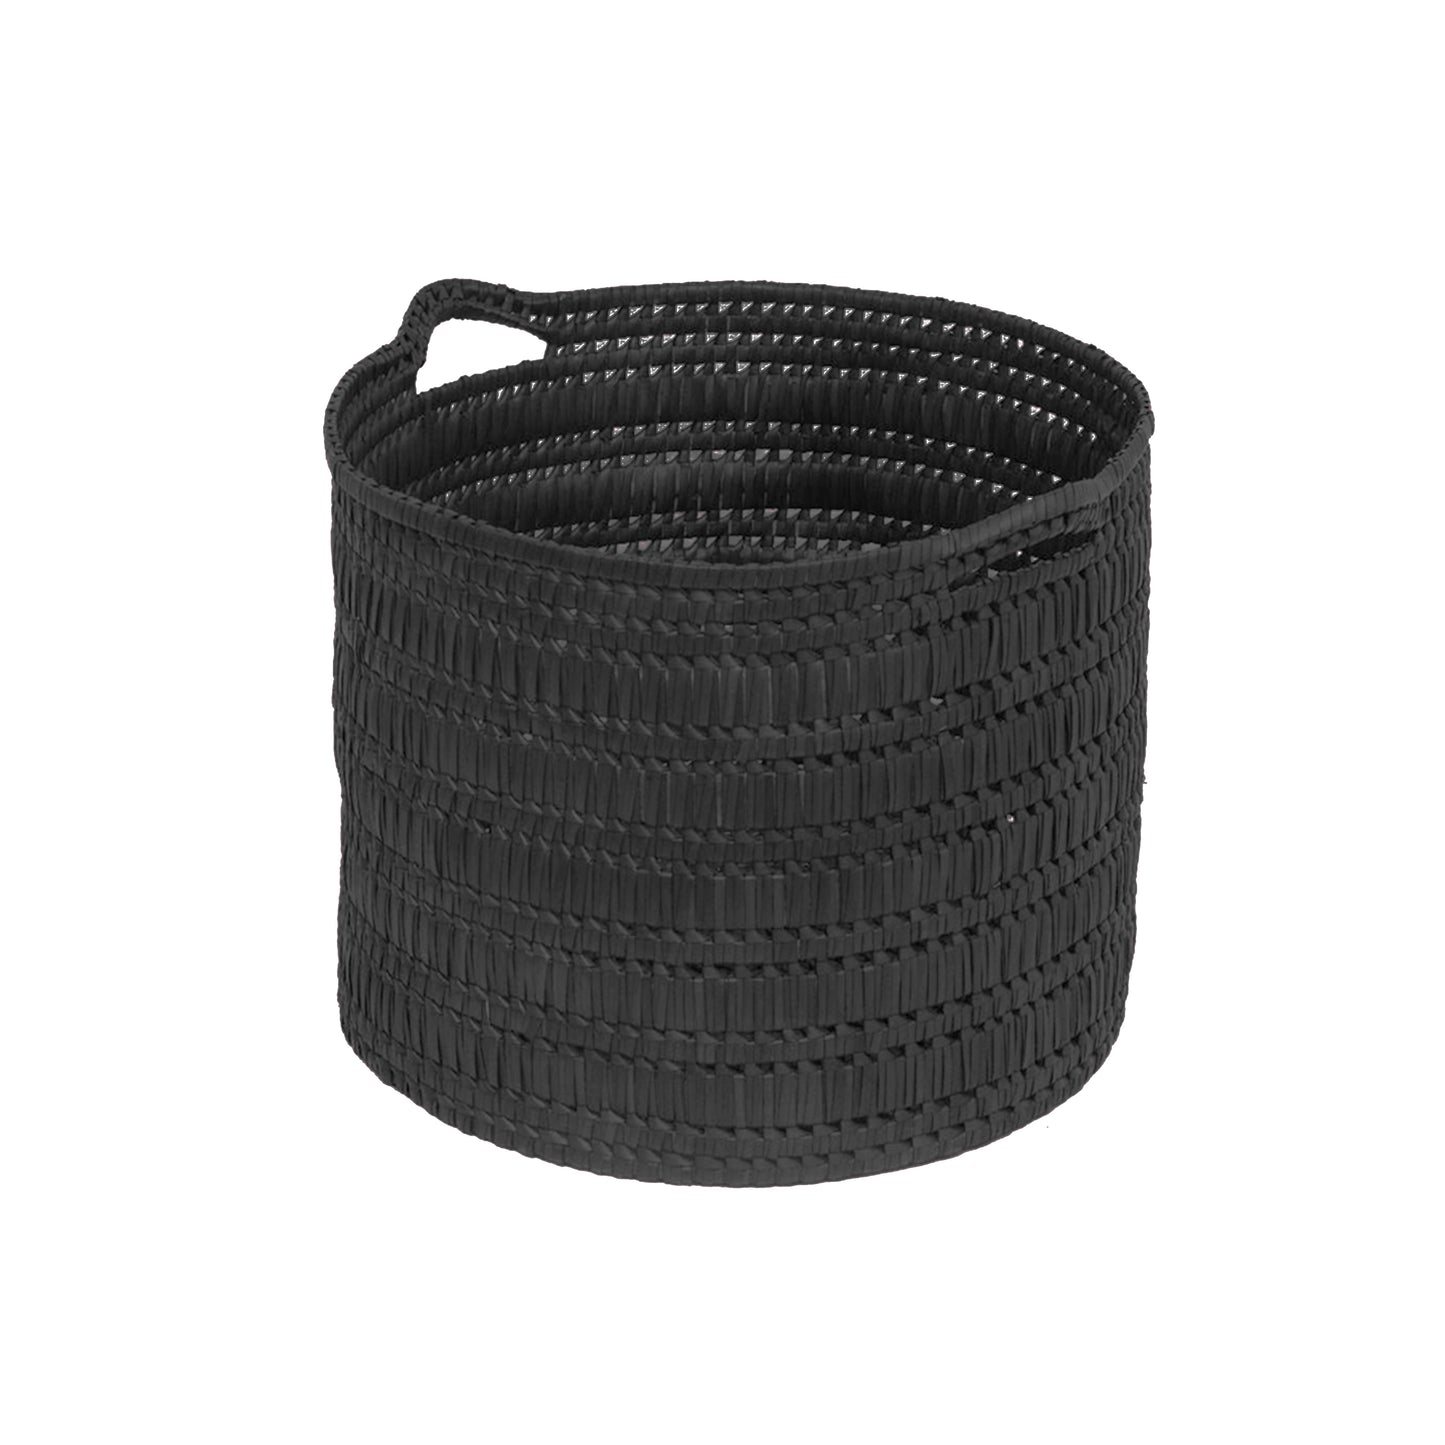 Handcrafted Palmyrah Basketwith Handle - Black